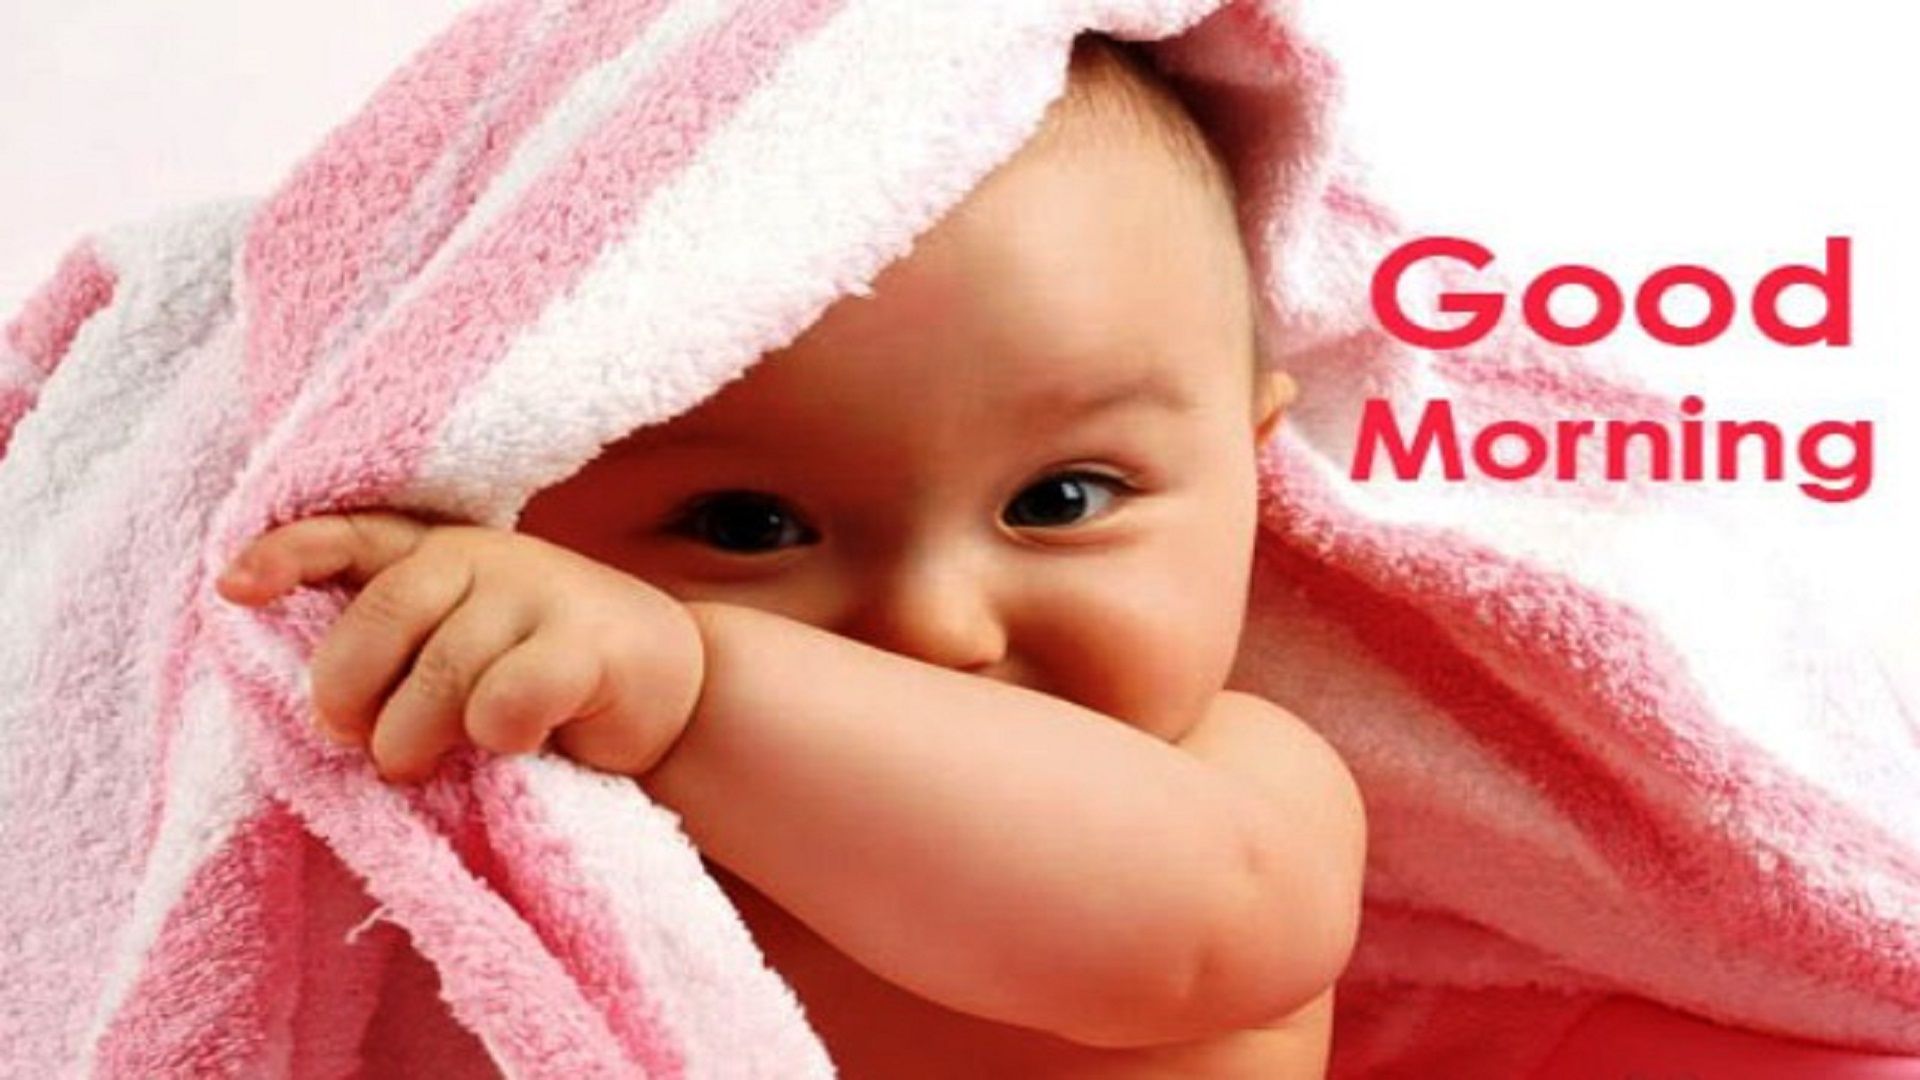 Baby Saying HD Good Morning Wallpaper Image Free Hello Good Morning HD Wallpaper